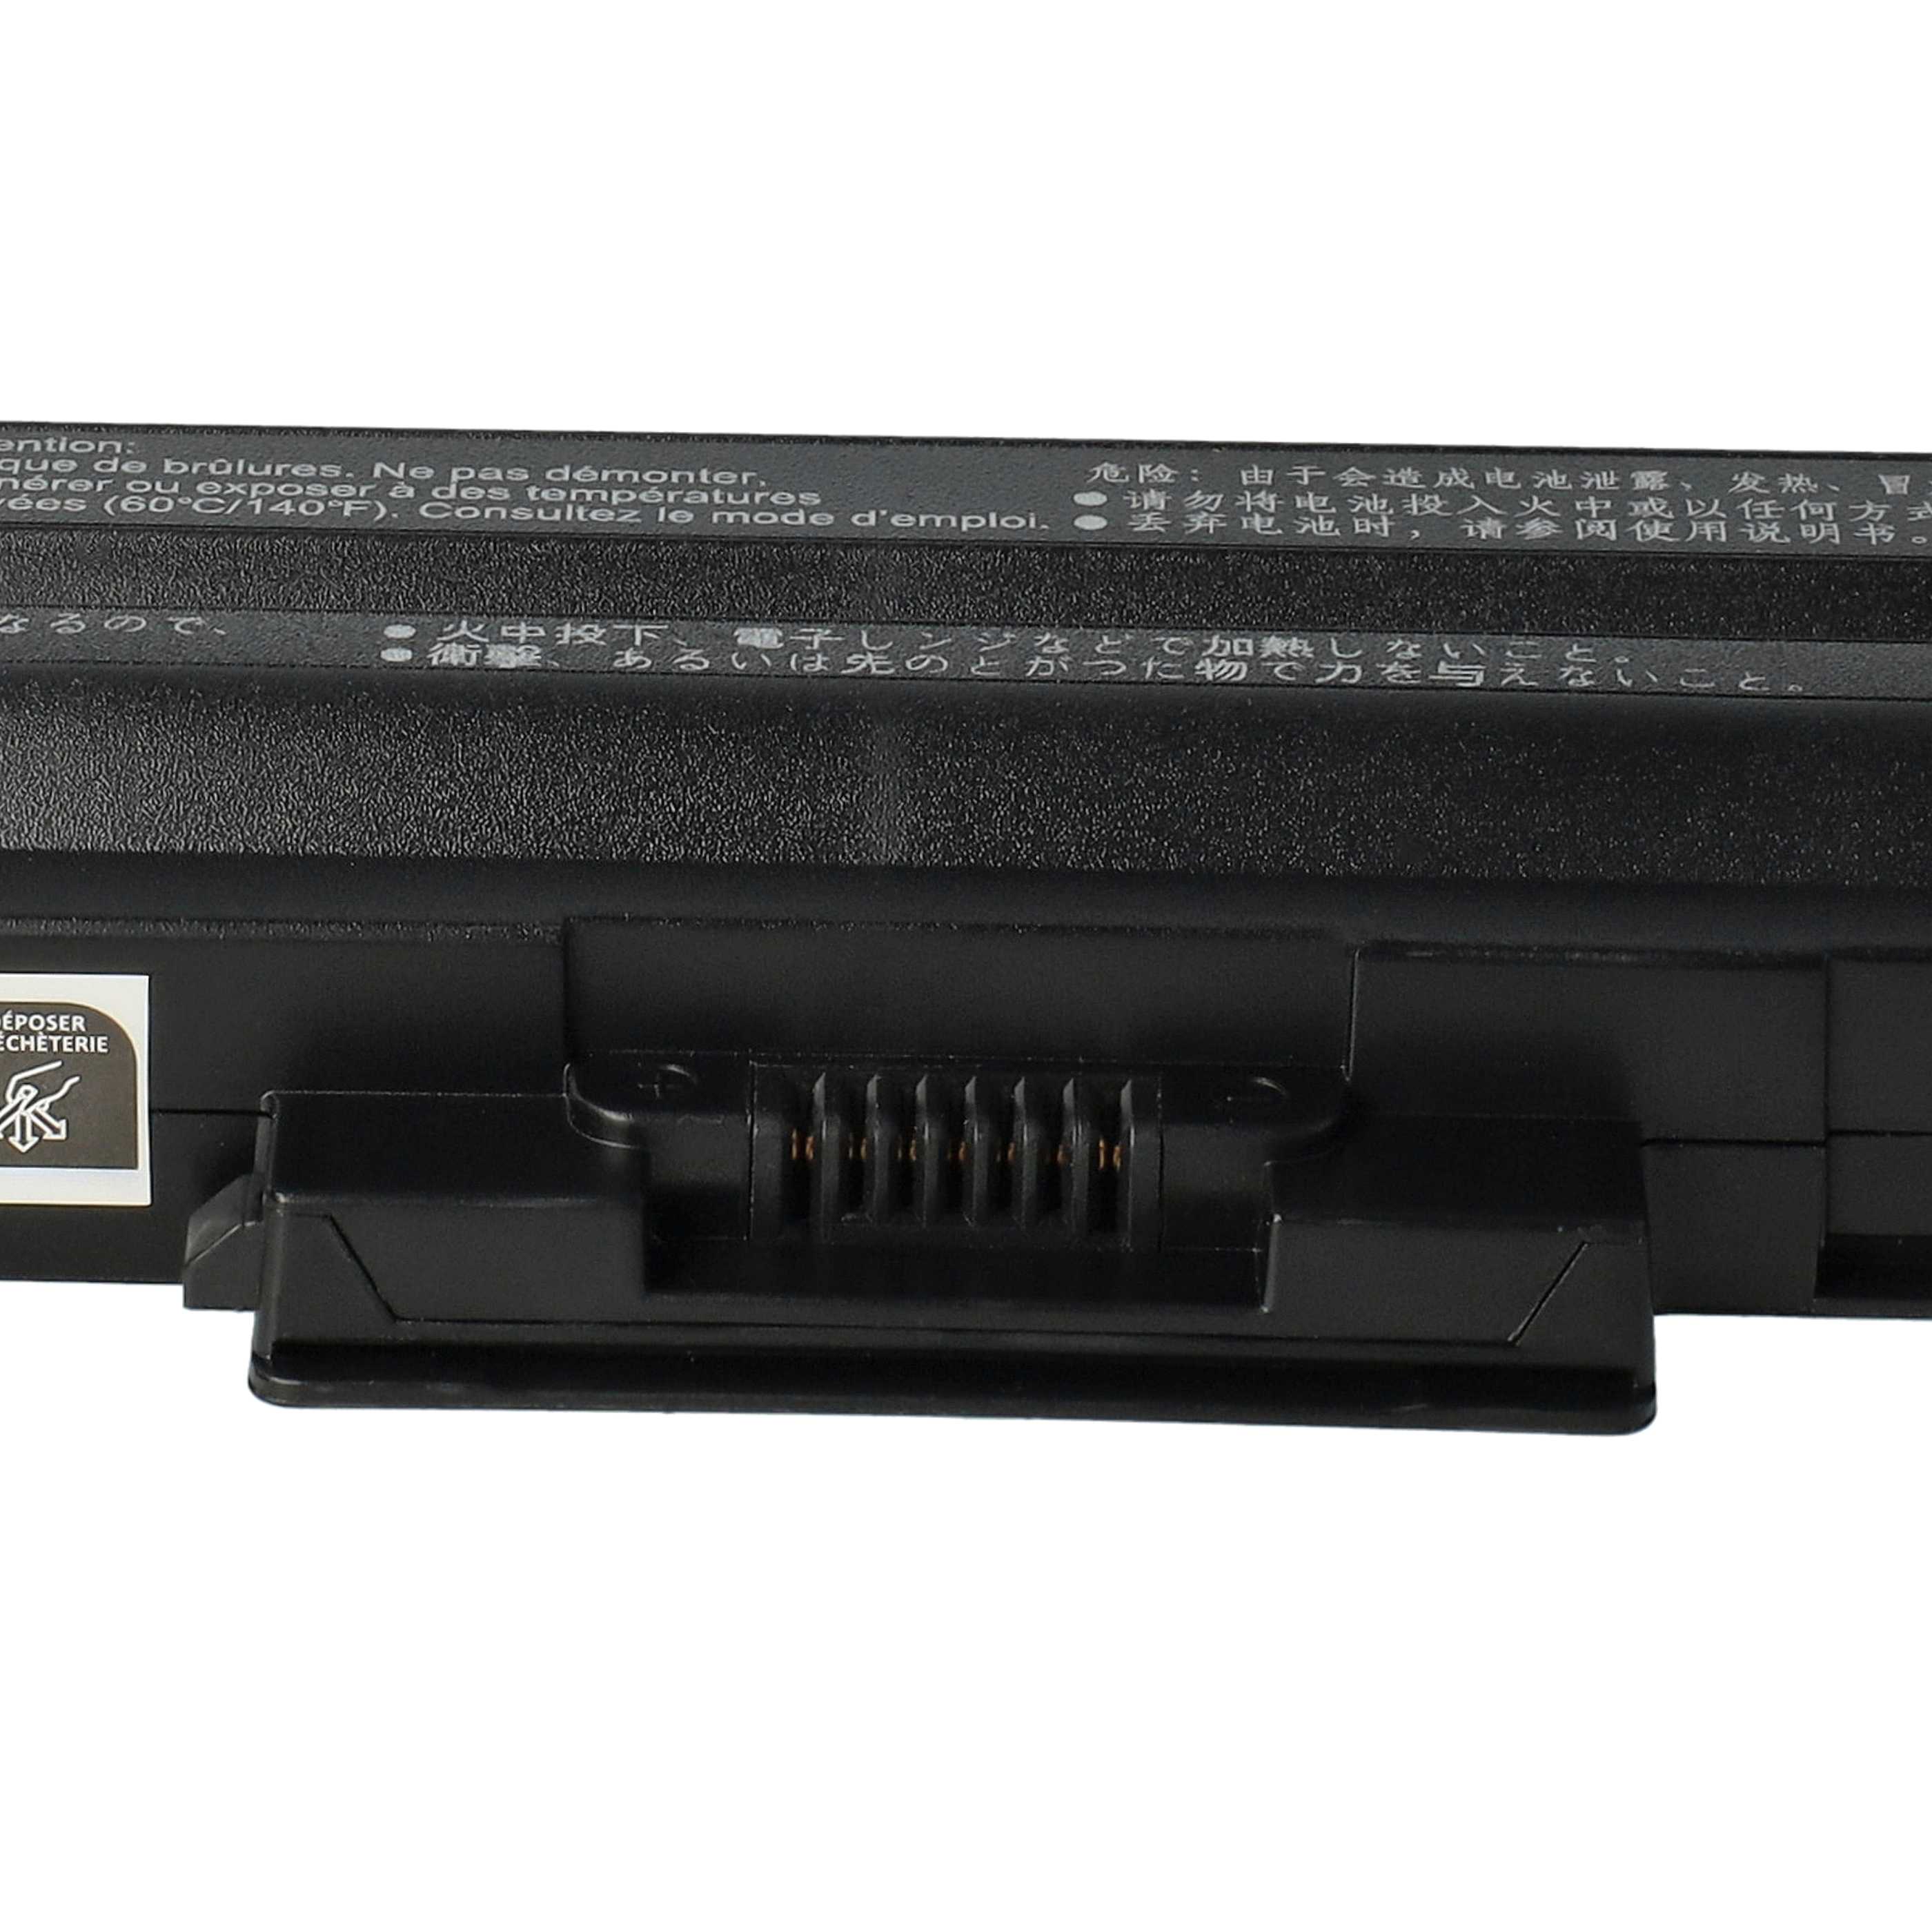 Akumulator do laptopa zamiennik Sony VGP-BPS13, VGP-BPL21, VGP-BPL13 - 4400 mAh 11,1 V Li-Ion, czarny